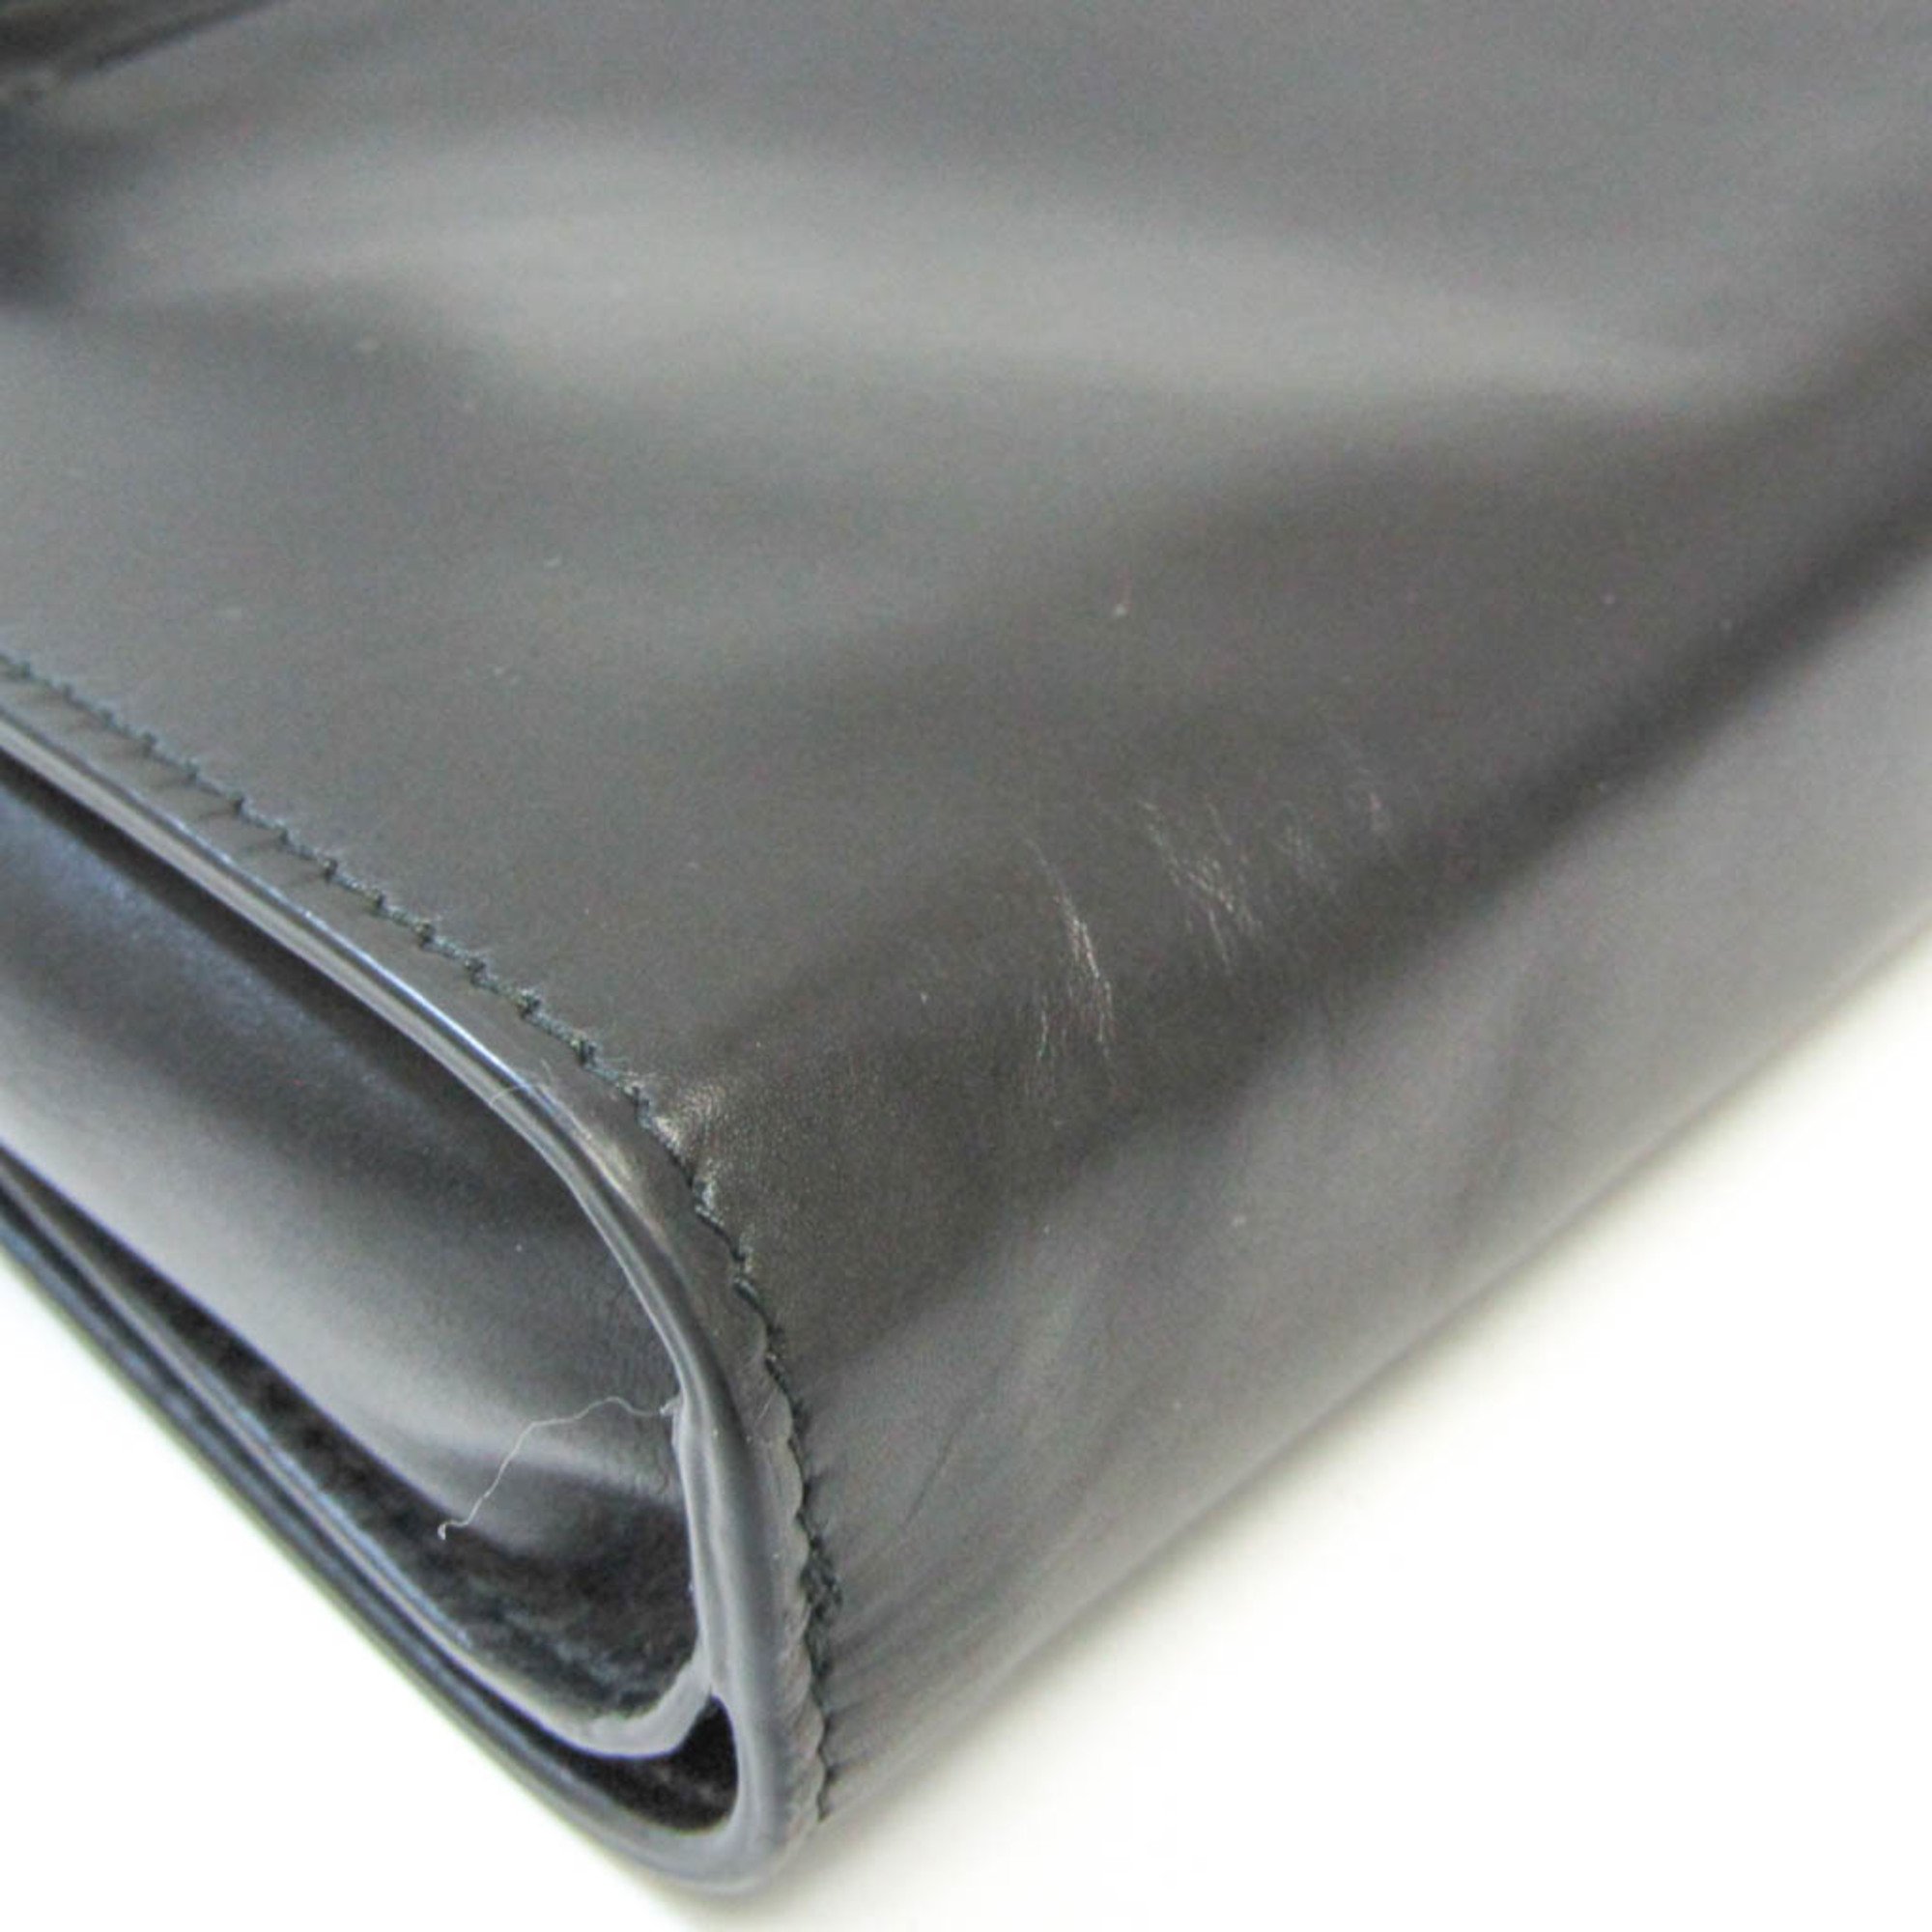 Bottega Veneta Intrecciato LEGGERRO 302652 Men's Leather Clutch Bag Black